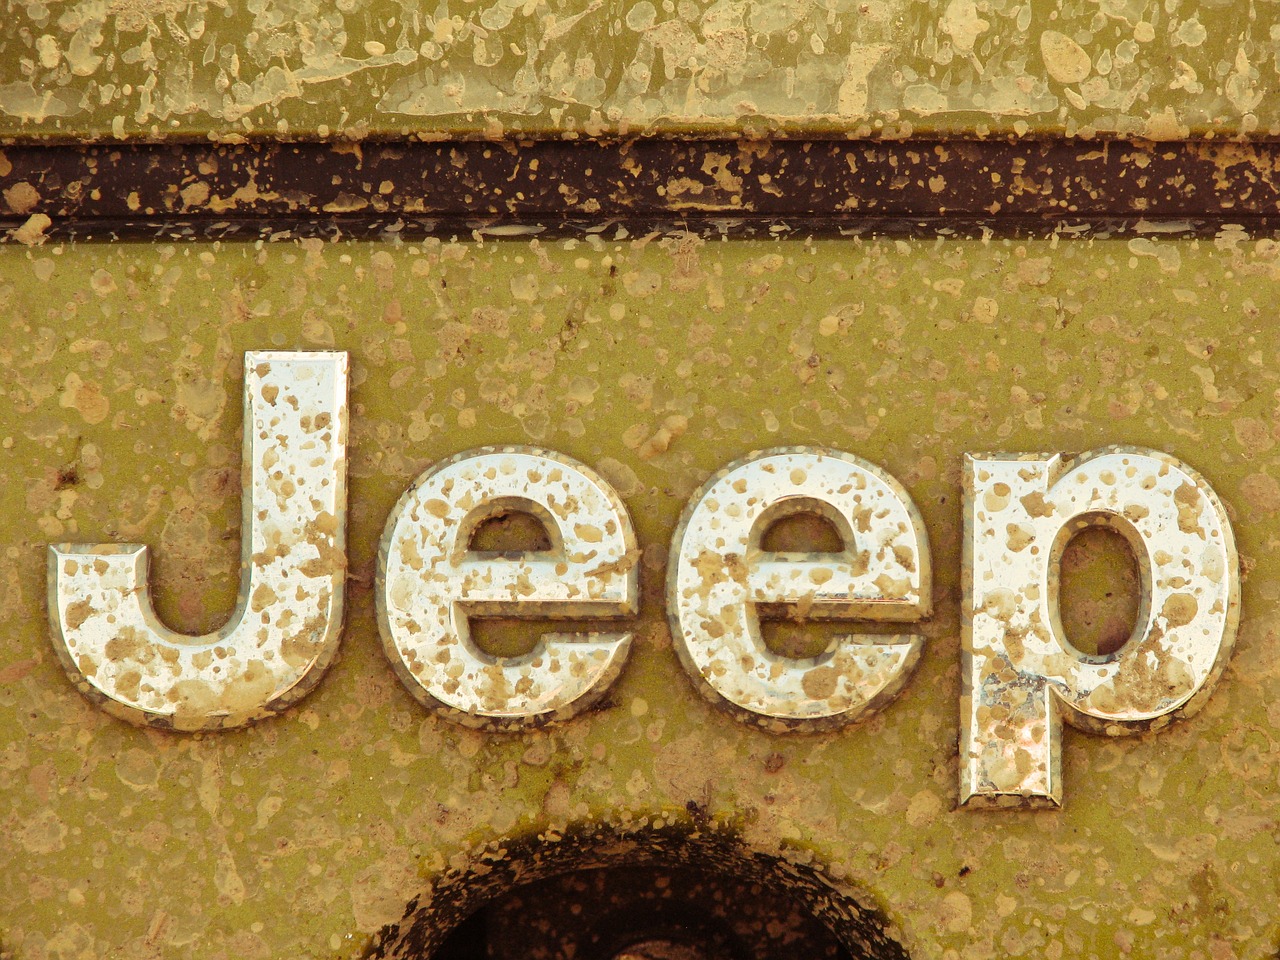 jeep wrangler 4 x 4 off road free photo